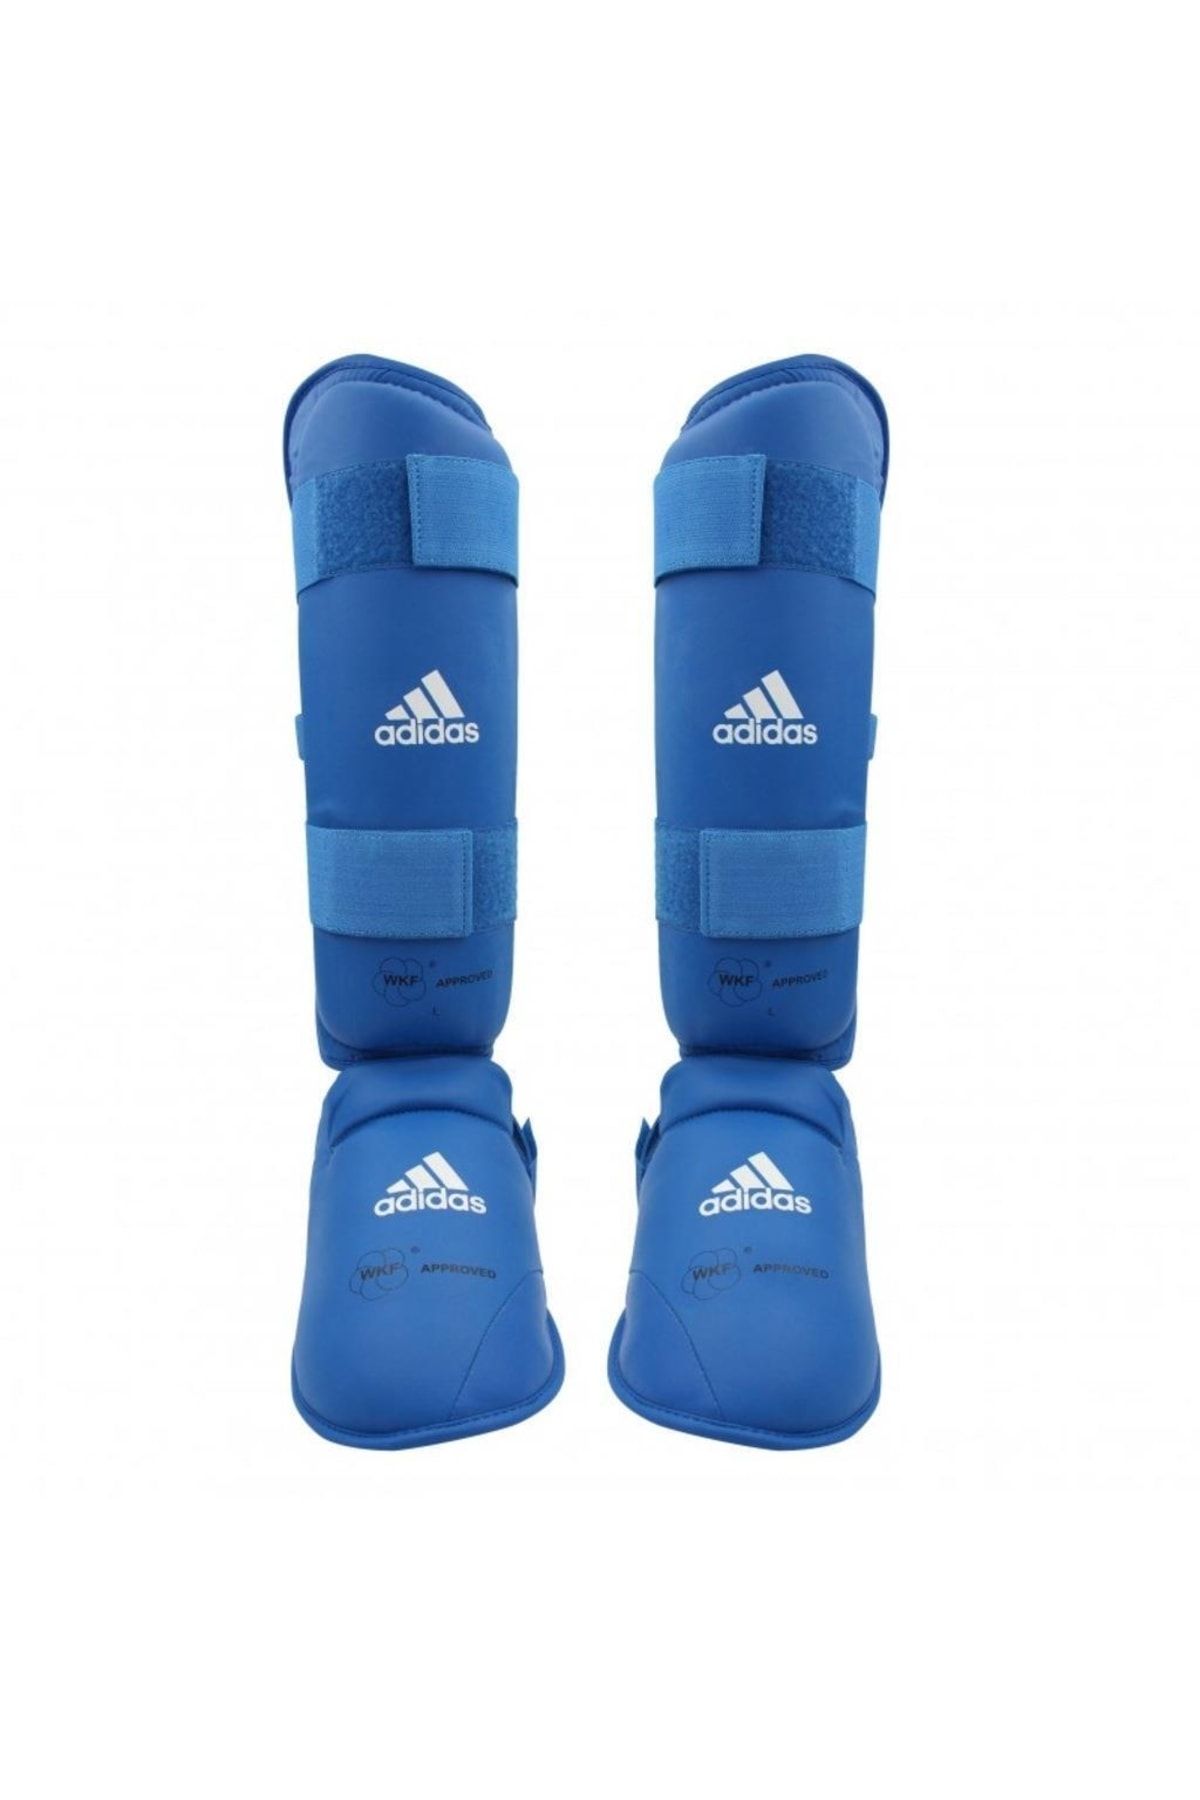 adidas Wkf Onaylı Karate Kaval Ayak Koruyucu Mavi - Kırmızı